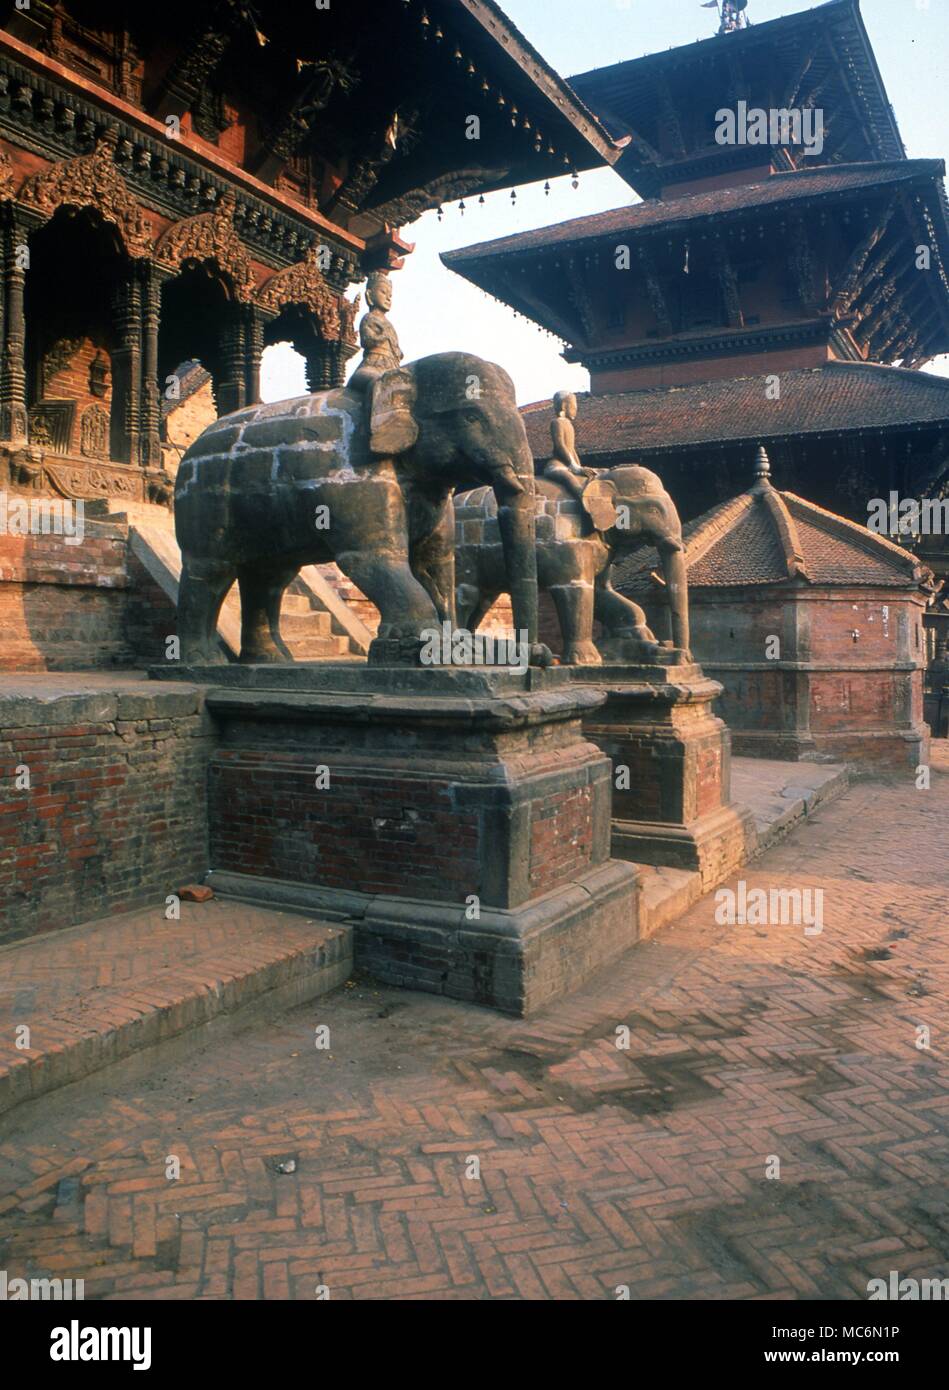 Nepal - Patan The elephants guarding the entrance to the Bishwa Nath Mandir, temple, Patan, Nepal. Stock Photo